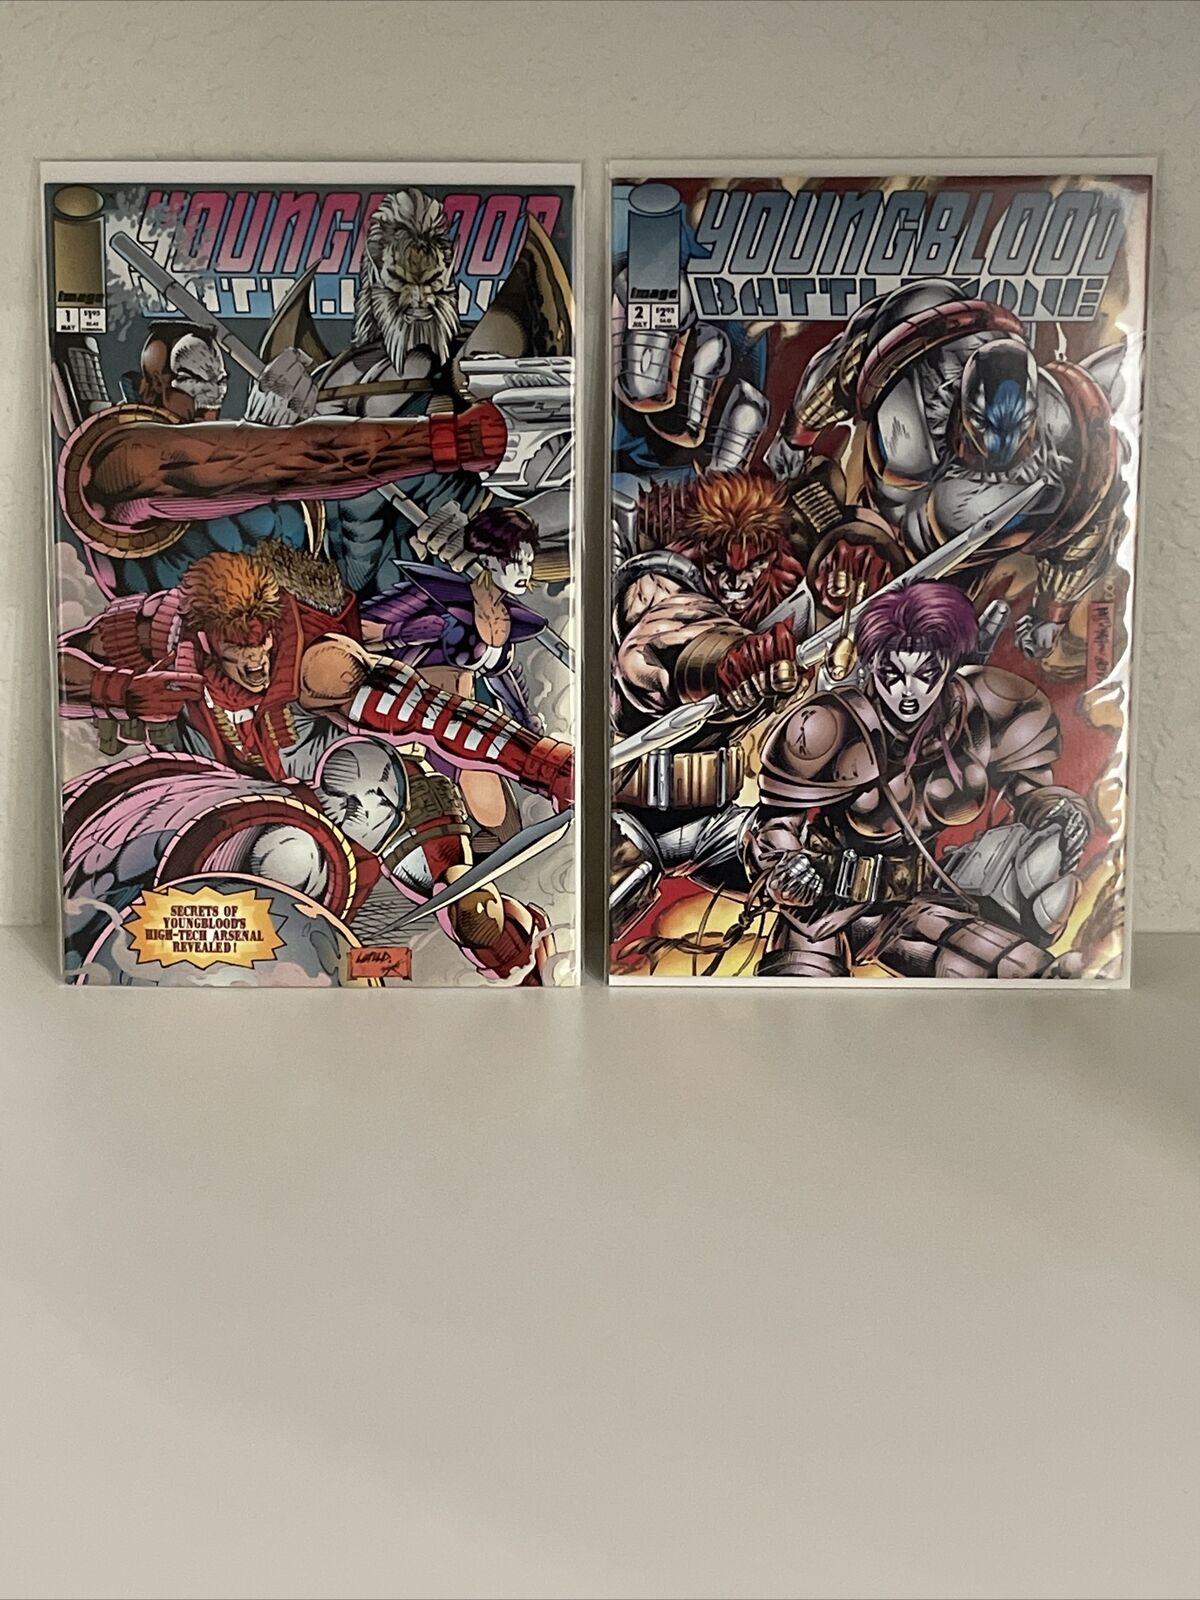 Youngblood Battlezone 1 & 2 Complete Set Image Comics 1993